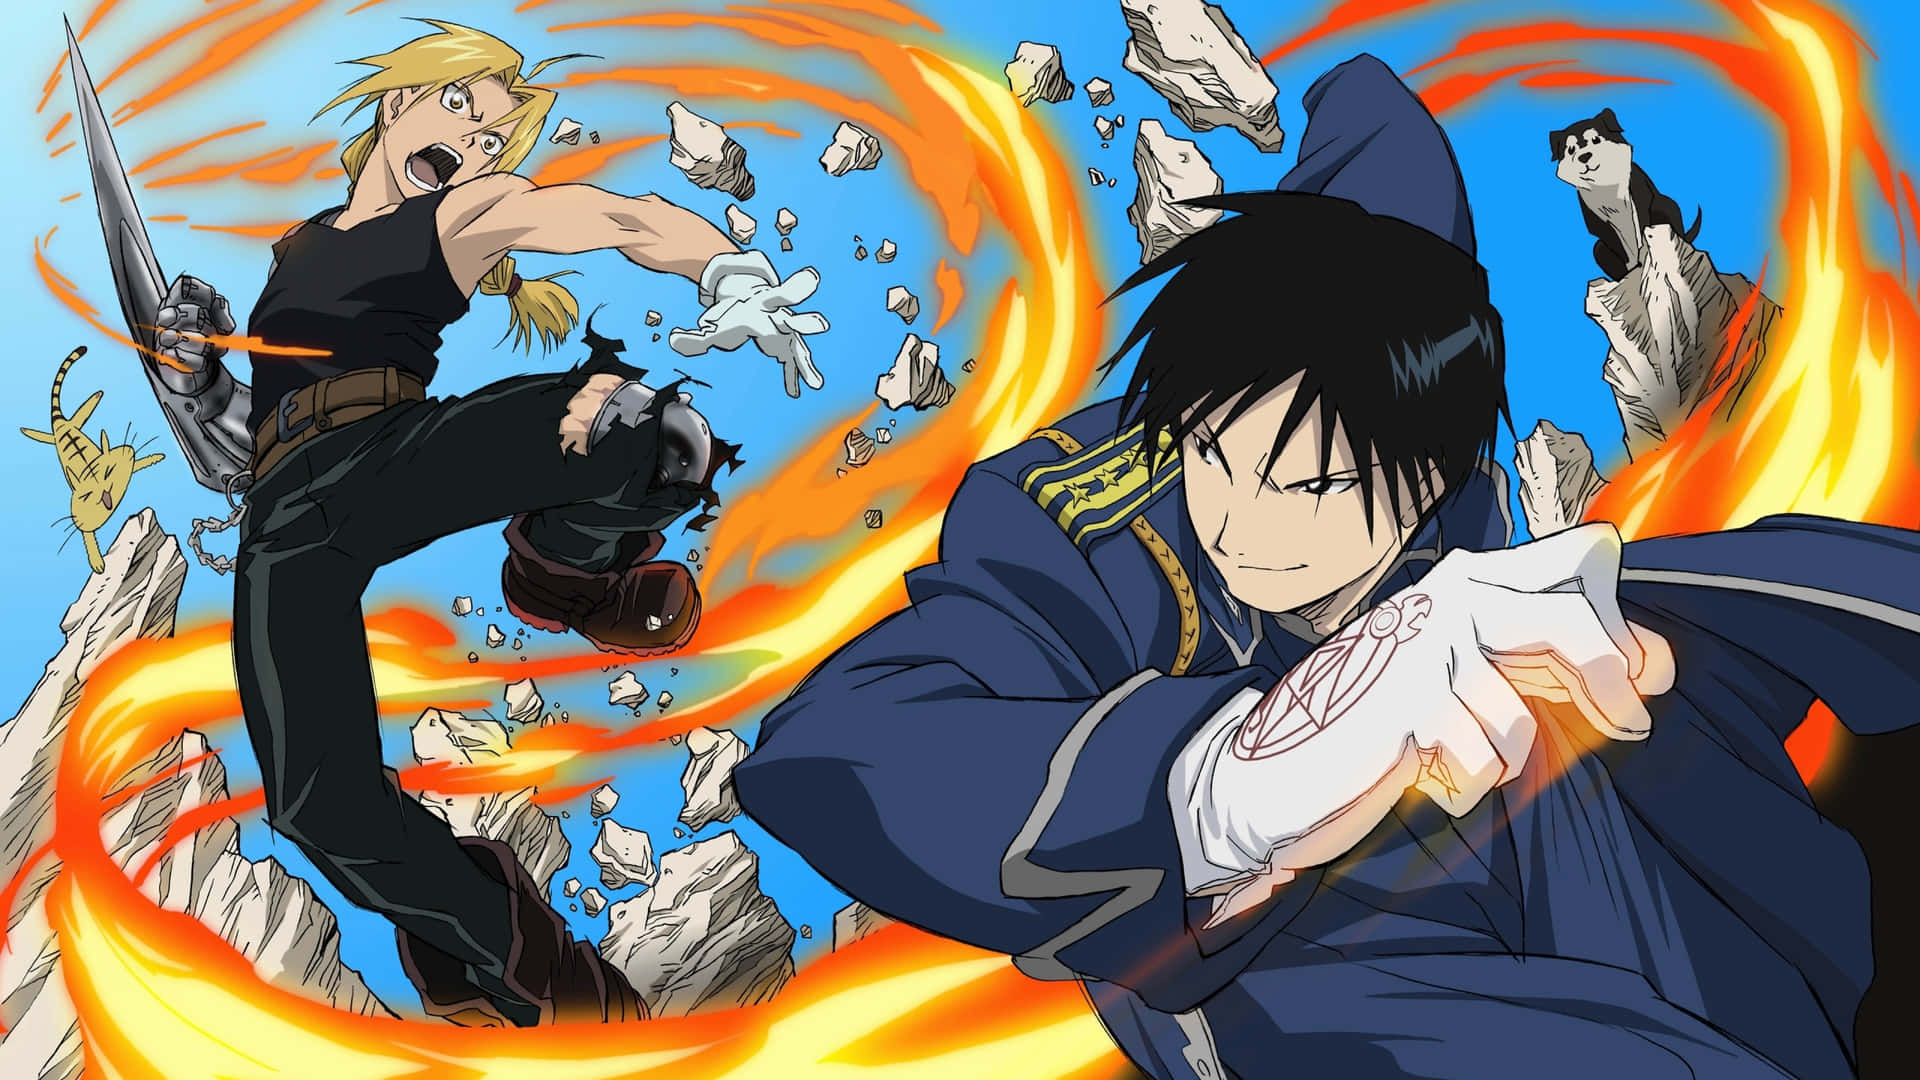 powers gif - Google Search  Anime fight, Anime, Aesthetic anime